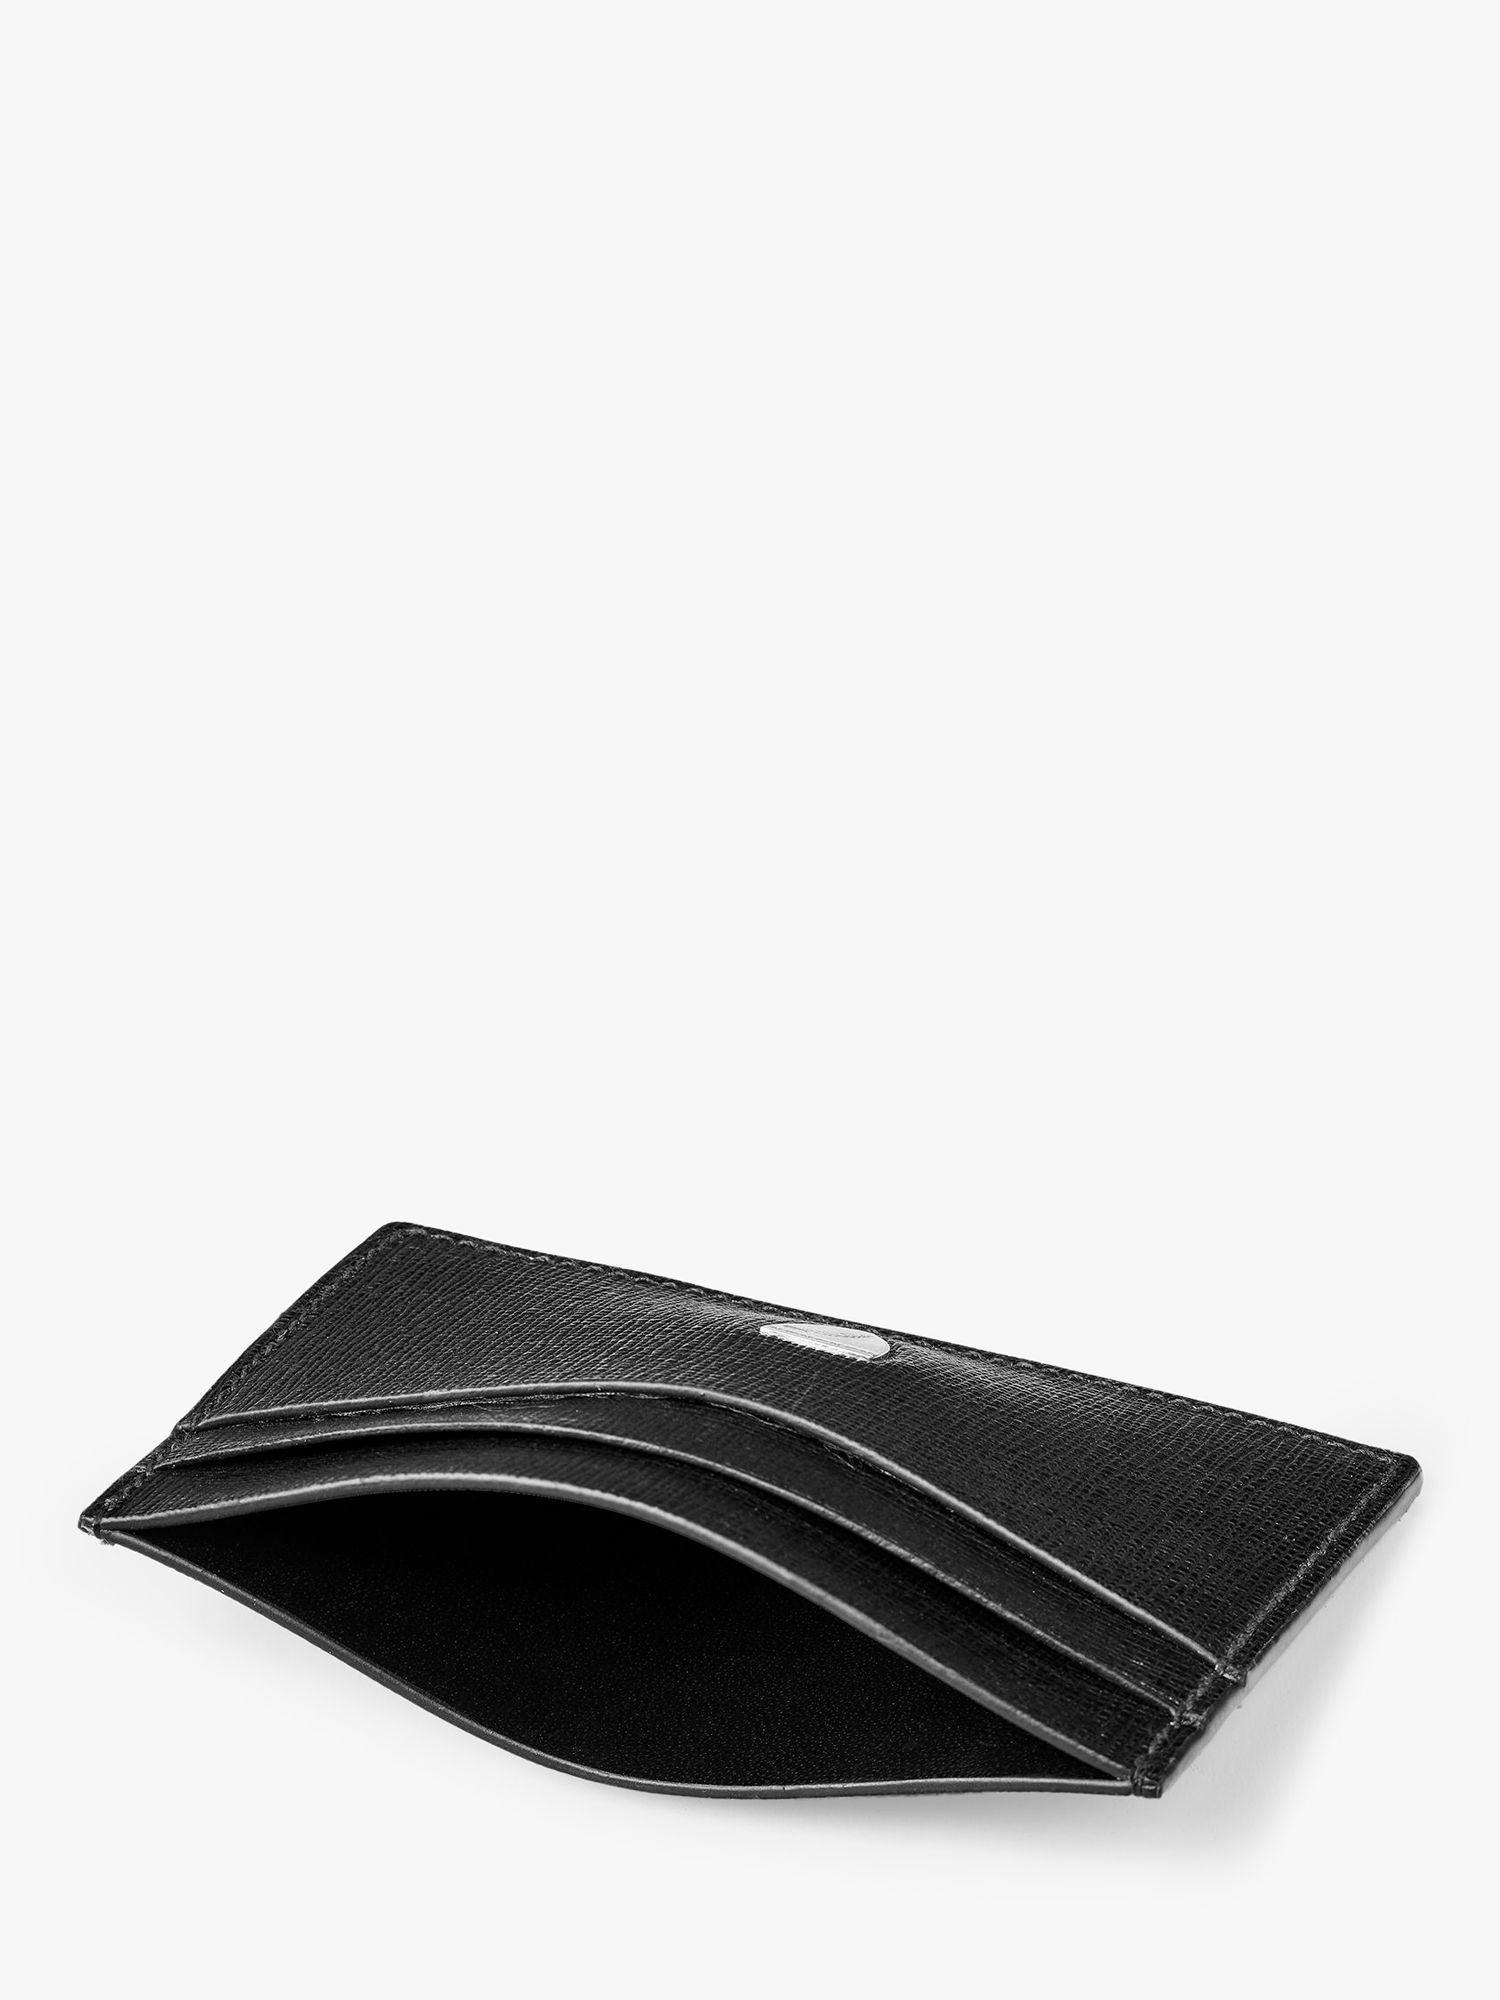 Aspinal of London Saffiano Leather Slim Credit Card Holder, Black